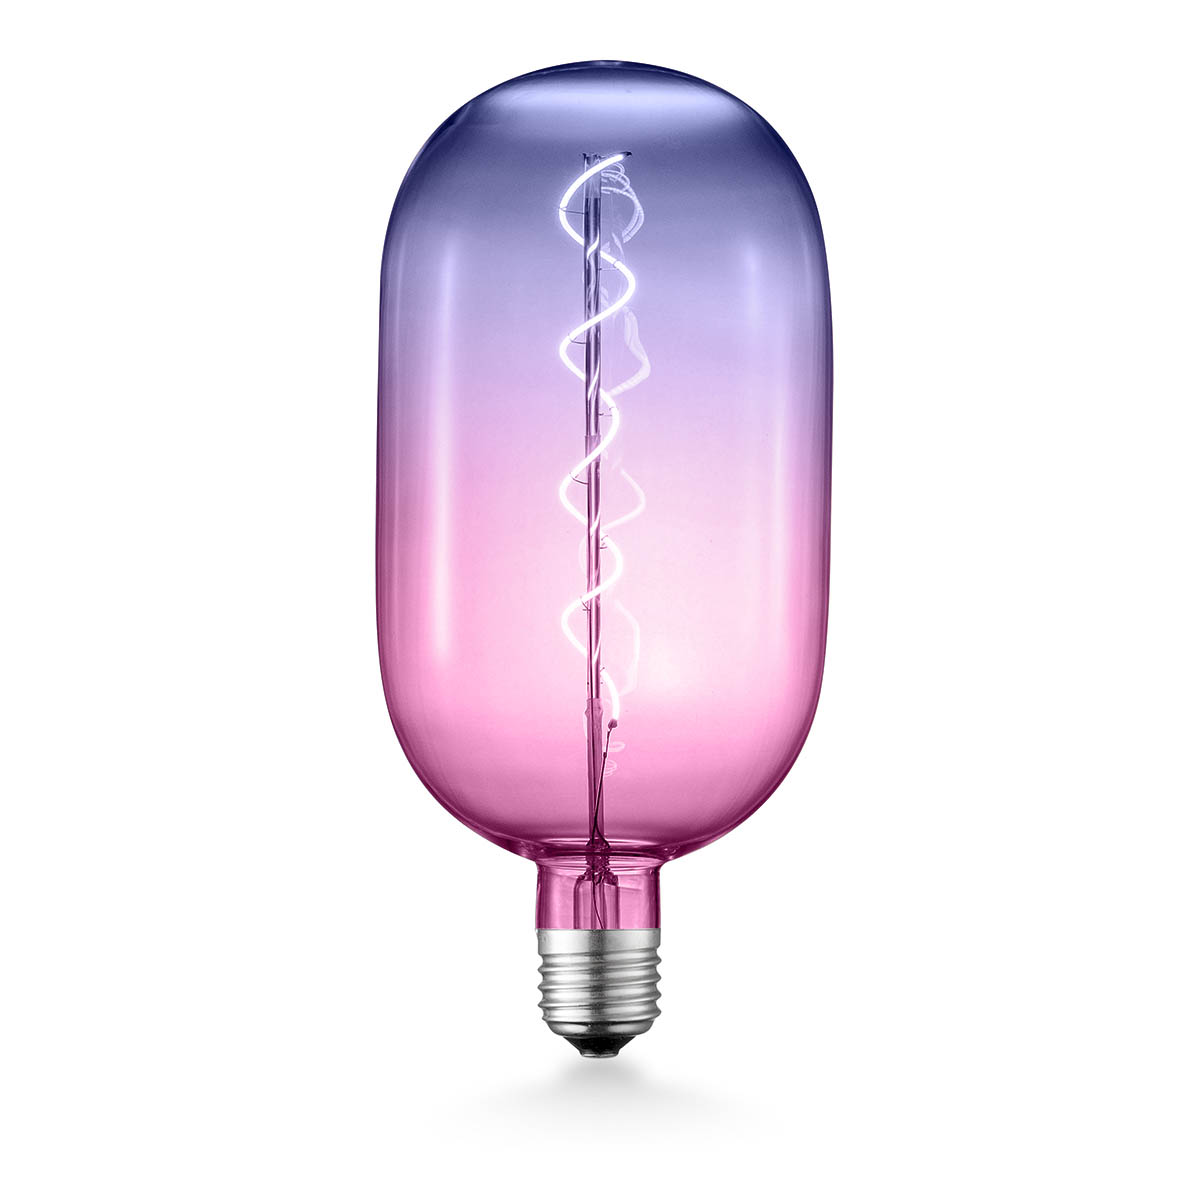 Tangla lighting - TLB-9001-04C - LED Light Bulb Single Spiral filament - 4W gradient color bulb - medium - blue - dimmable - E27